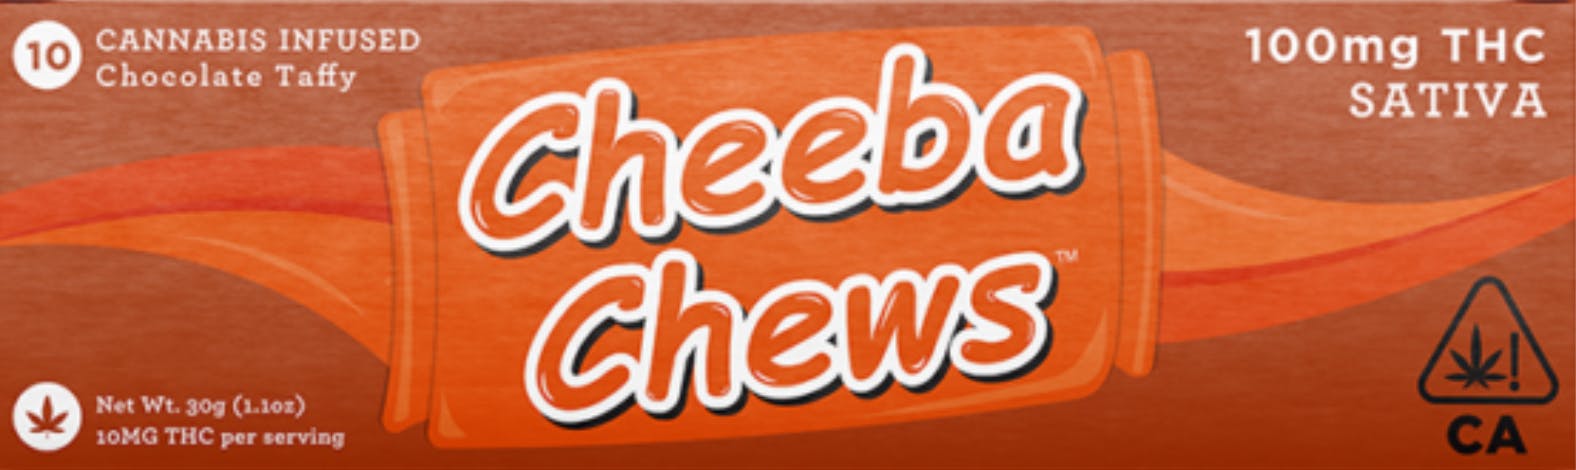 edible-cheeba-chews-sativa-chocolate-taffy-100mg